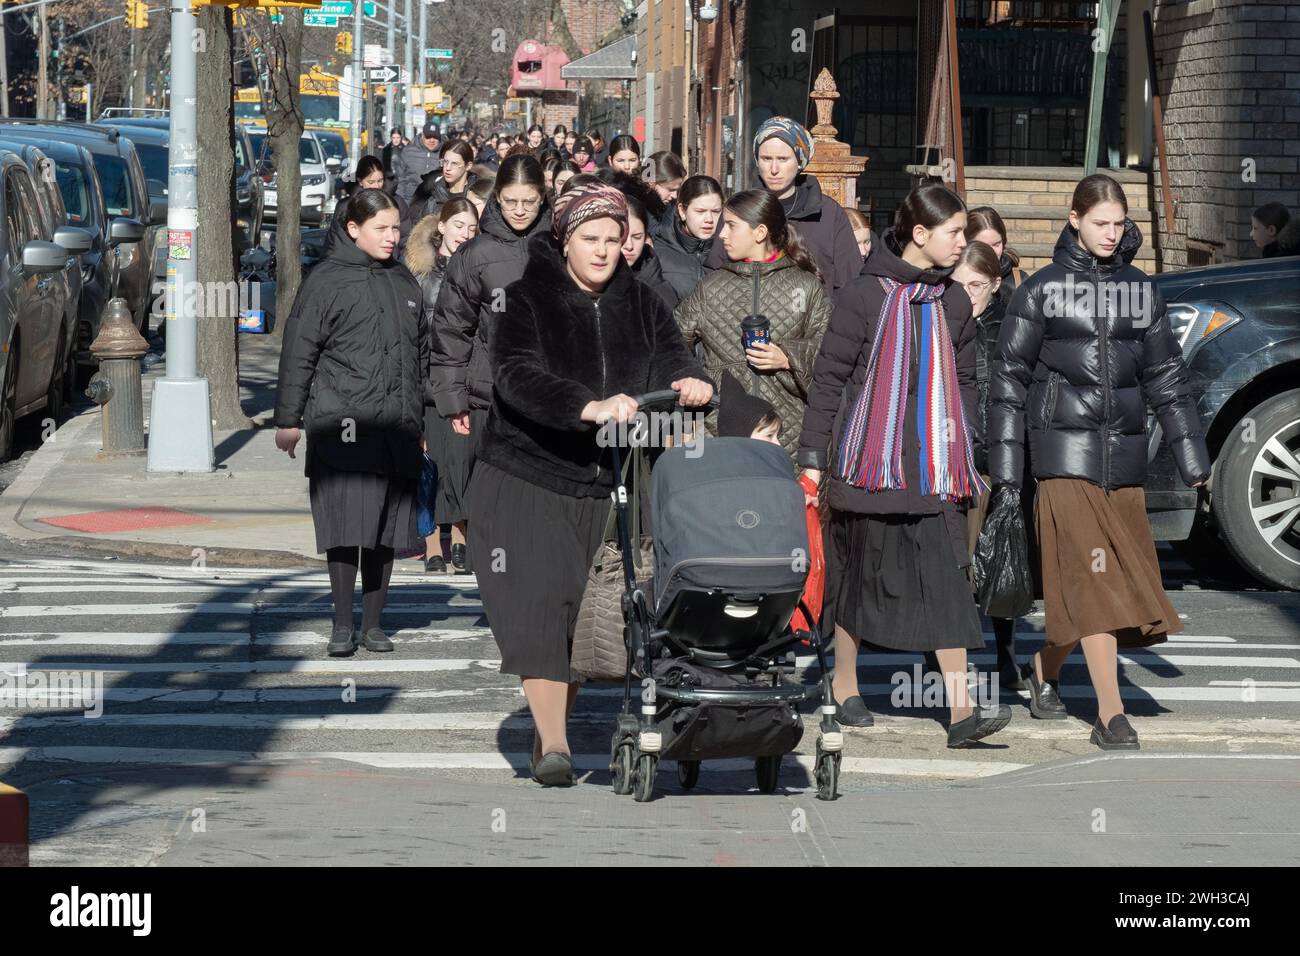 Orthodox Jewish women, primarily students going to school, cross a street on Harrison Avenue in Williamsburg, Brooklyn, New York. Stock Photo